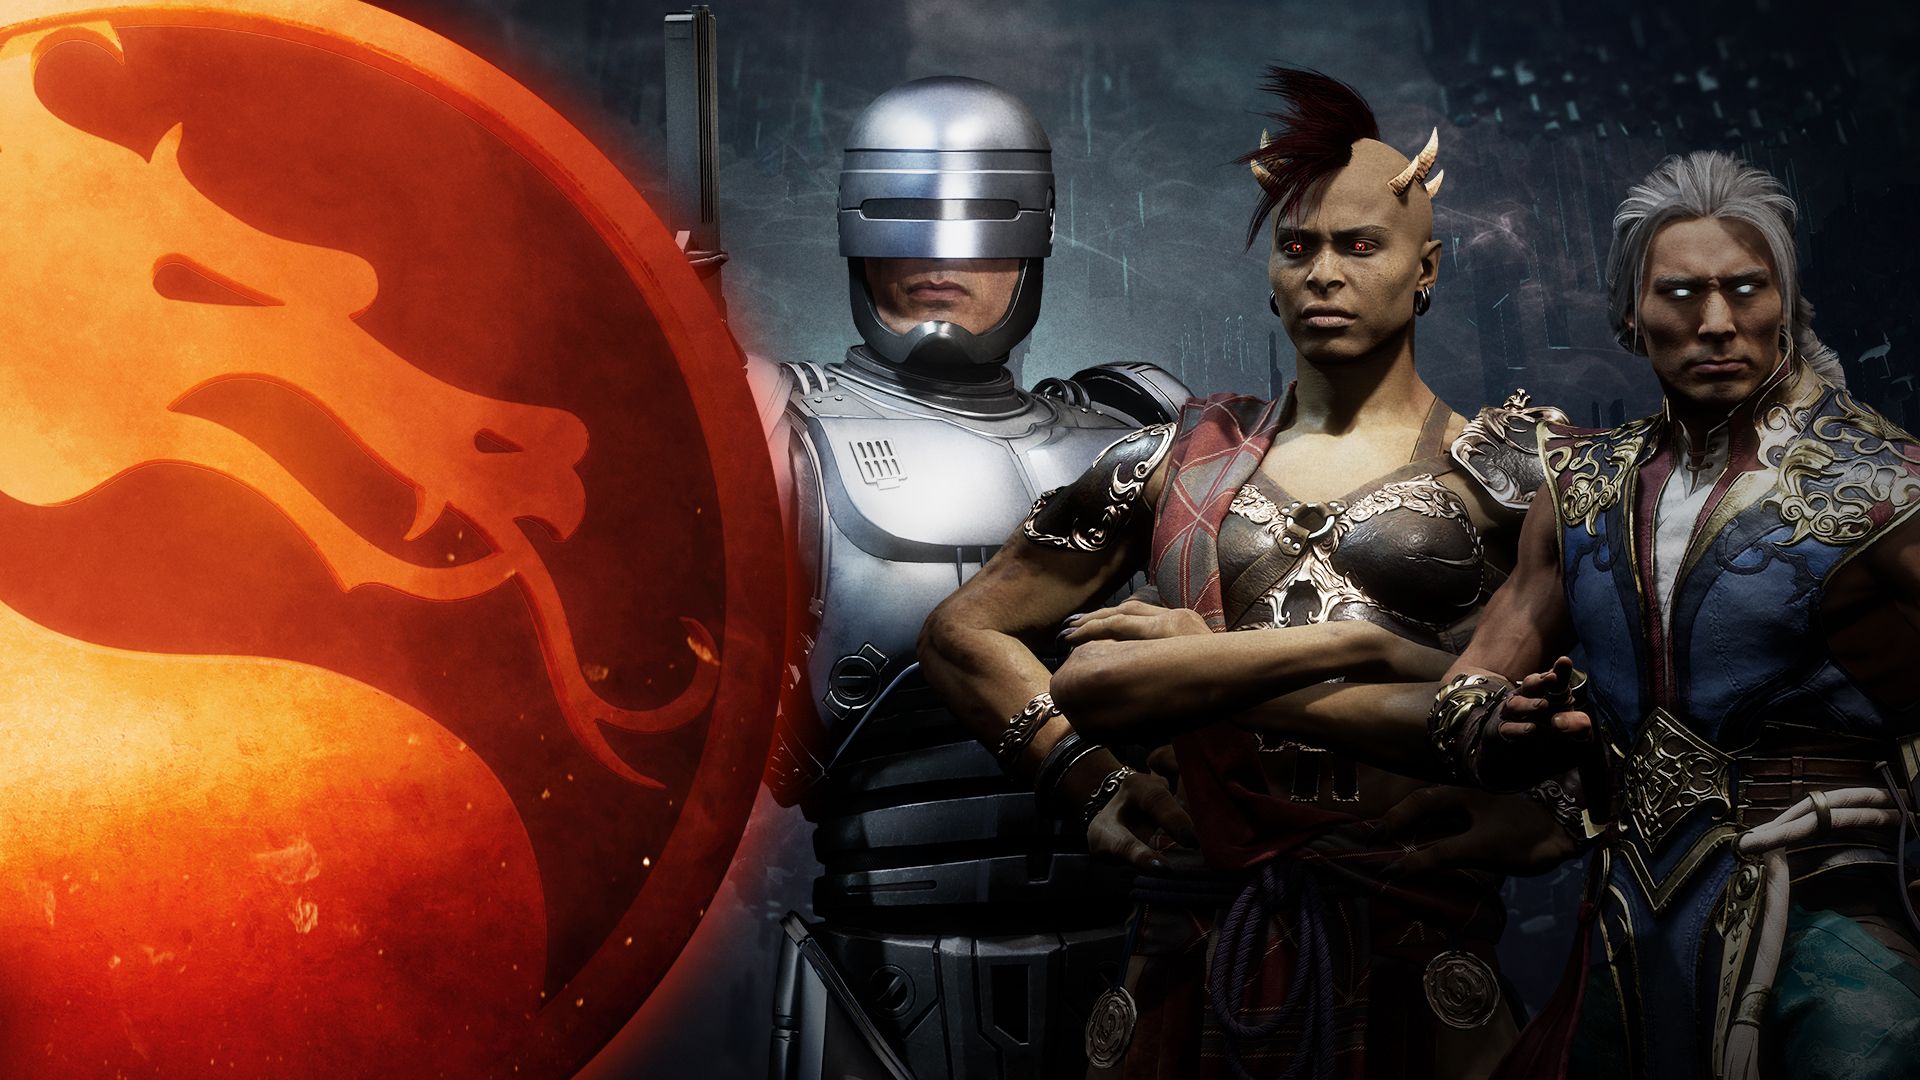 Mortal Kombat 11: Aftermath Xbox One [Digital Code] 